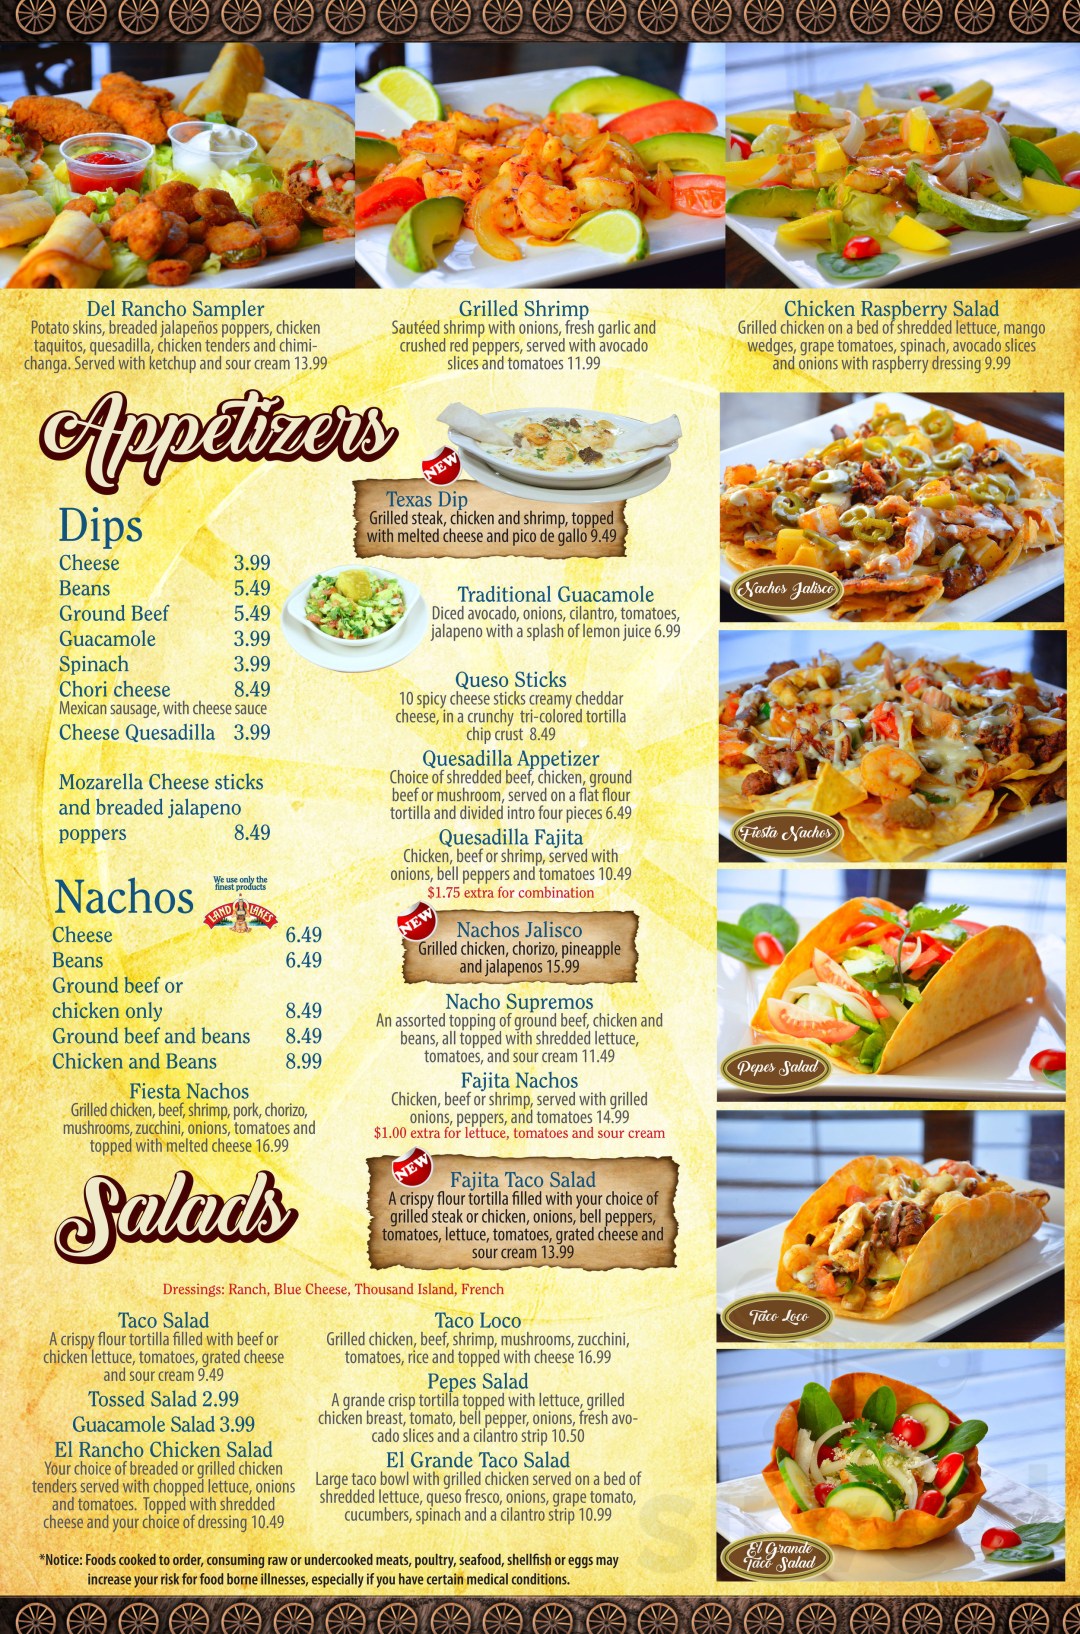 Picture of: El Rancho Grande Mexican Restaurant menu in Mason, Ohio, USA